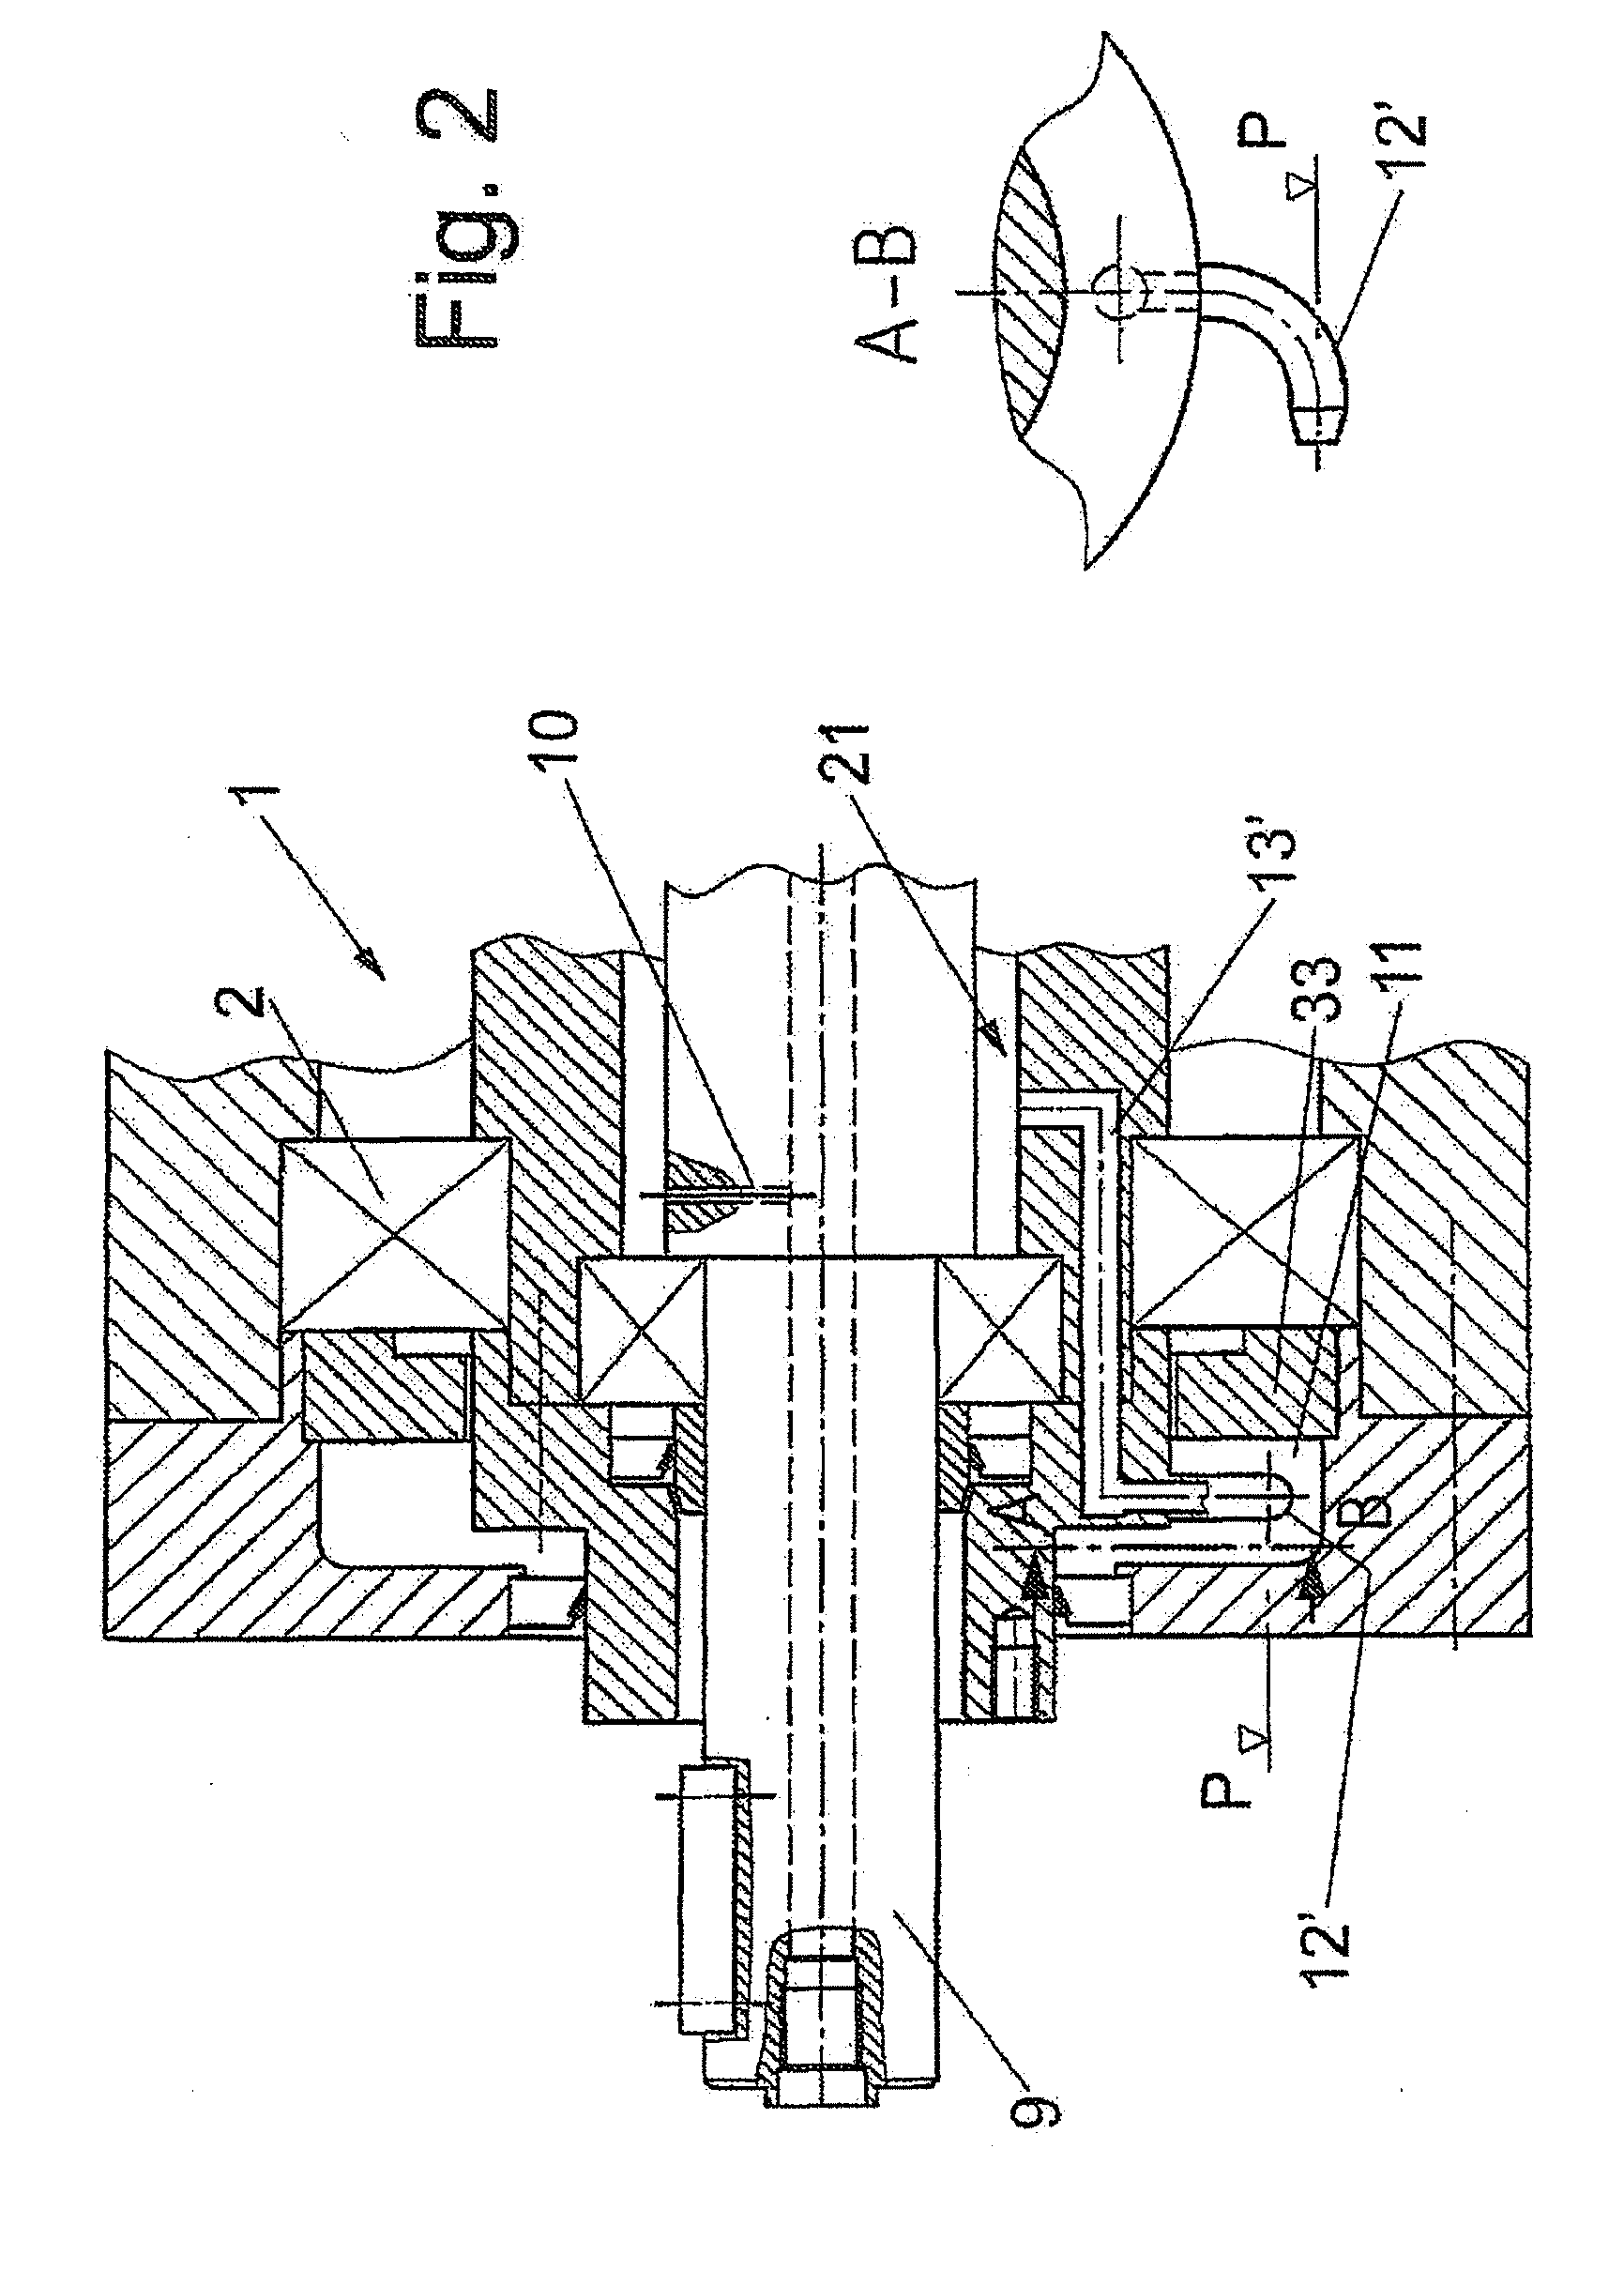 Gear apparatus for a centrifuge